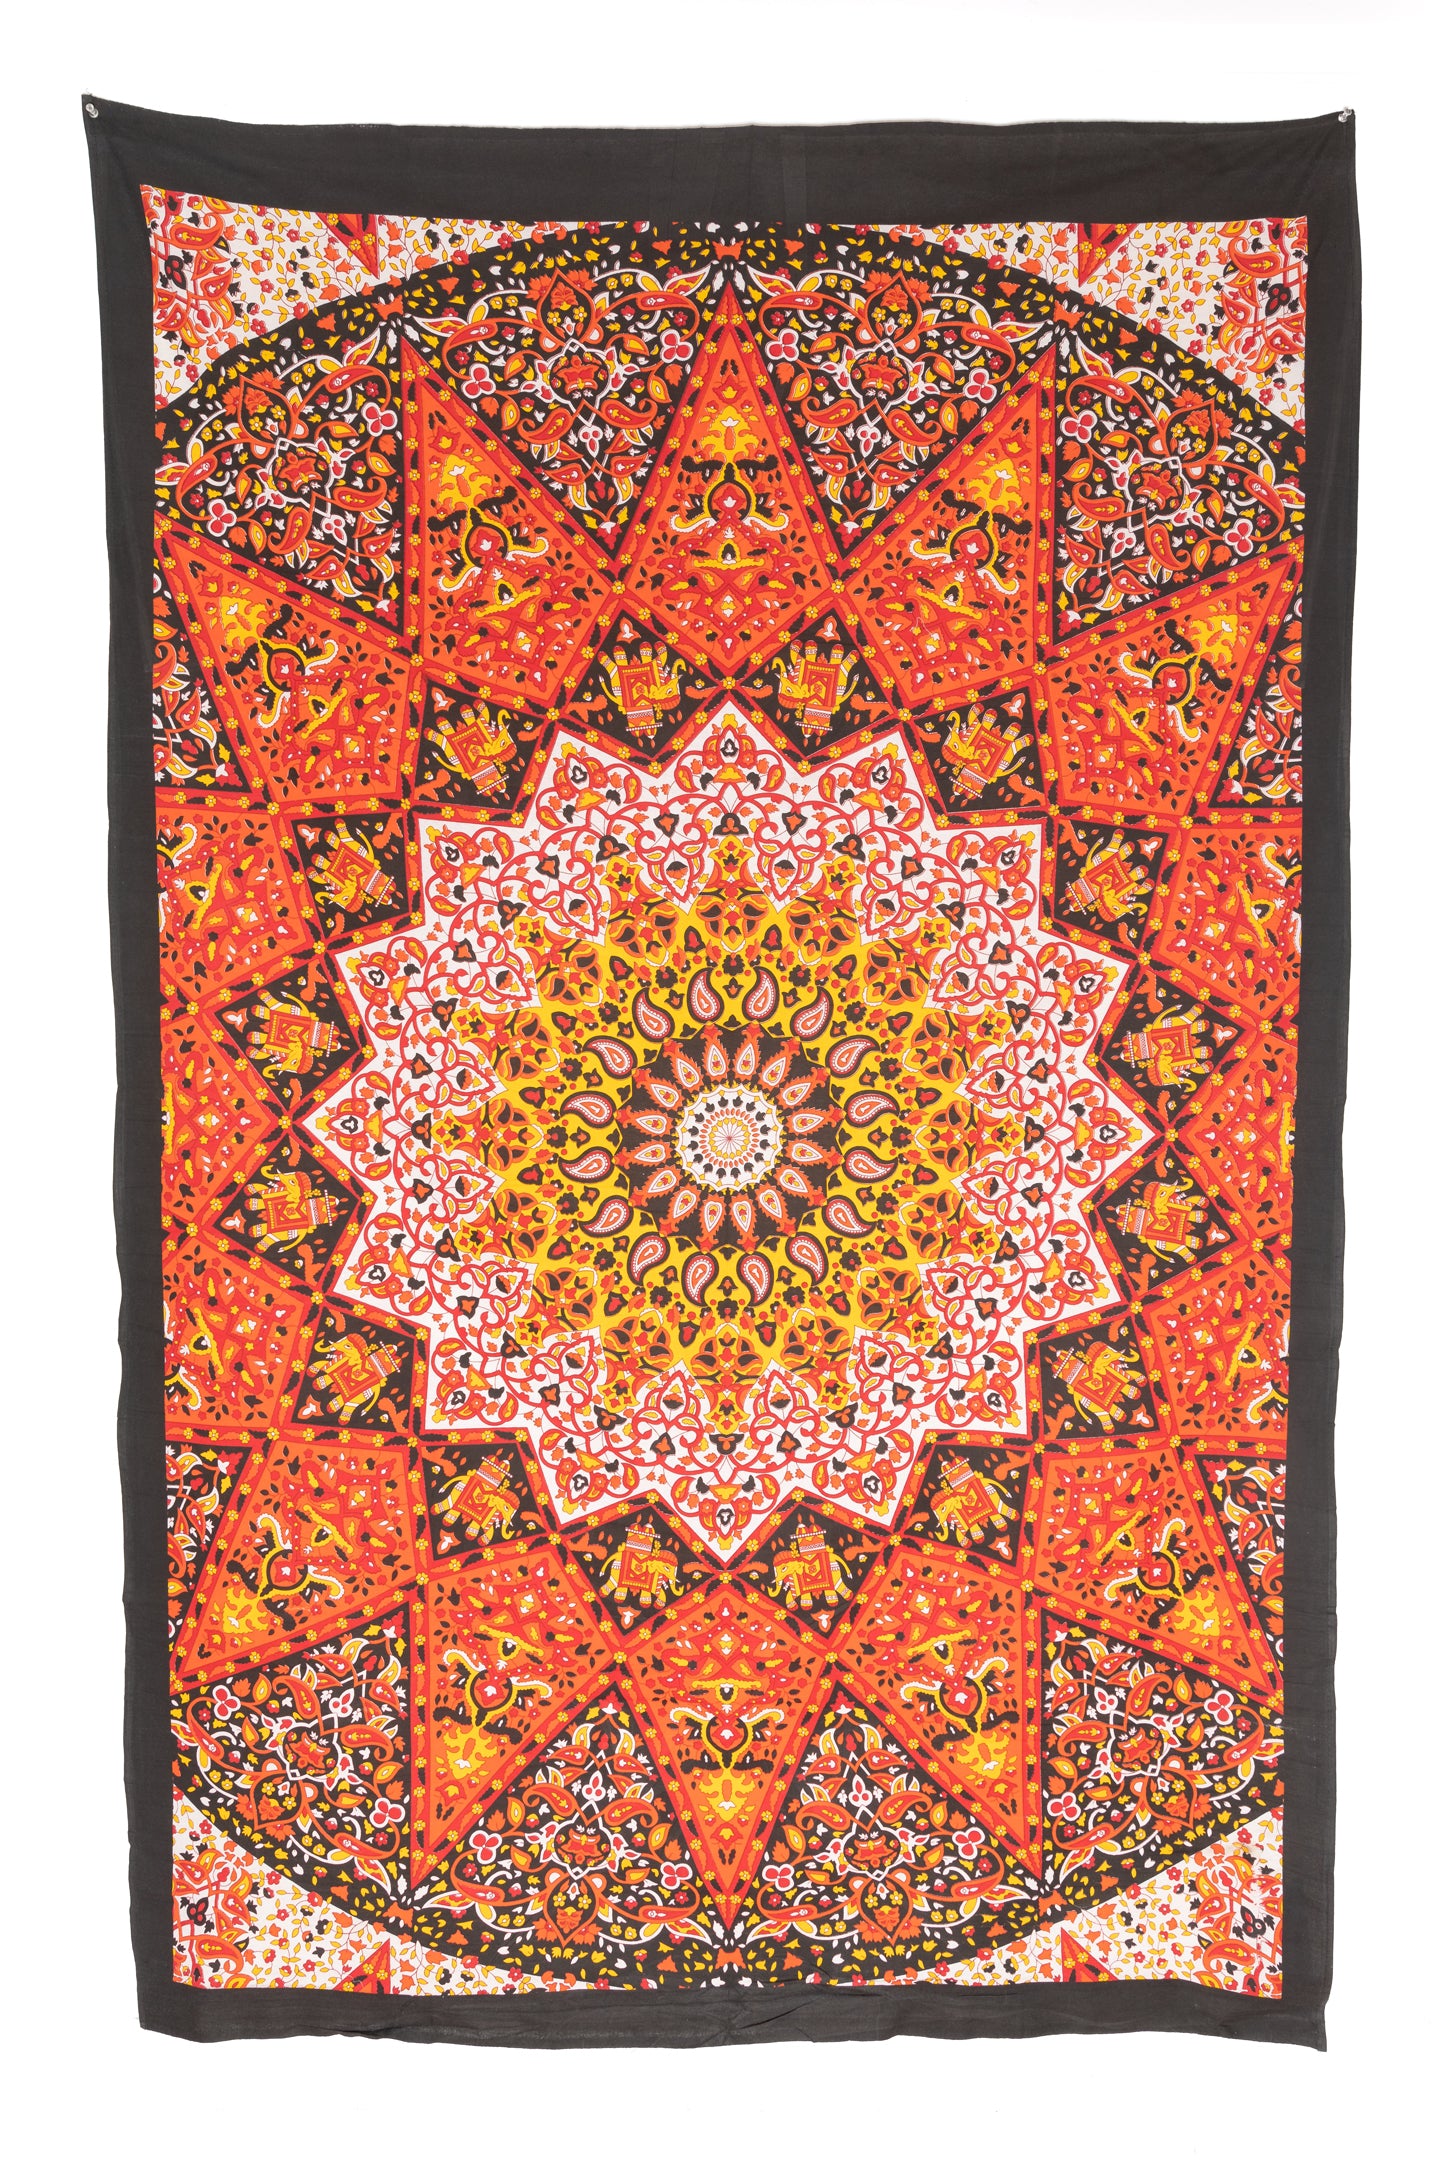 Star Mandala Tapestry